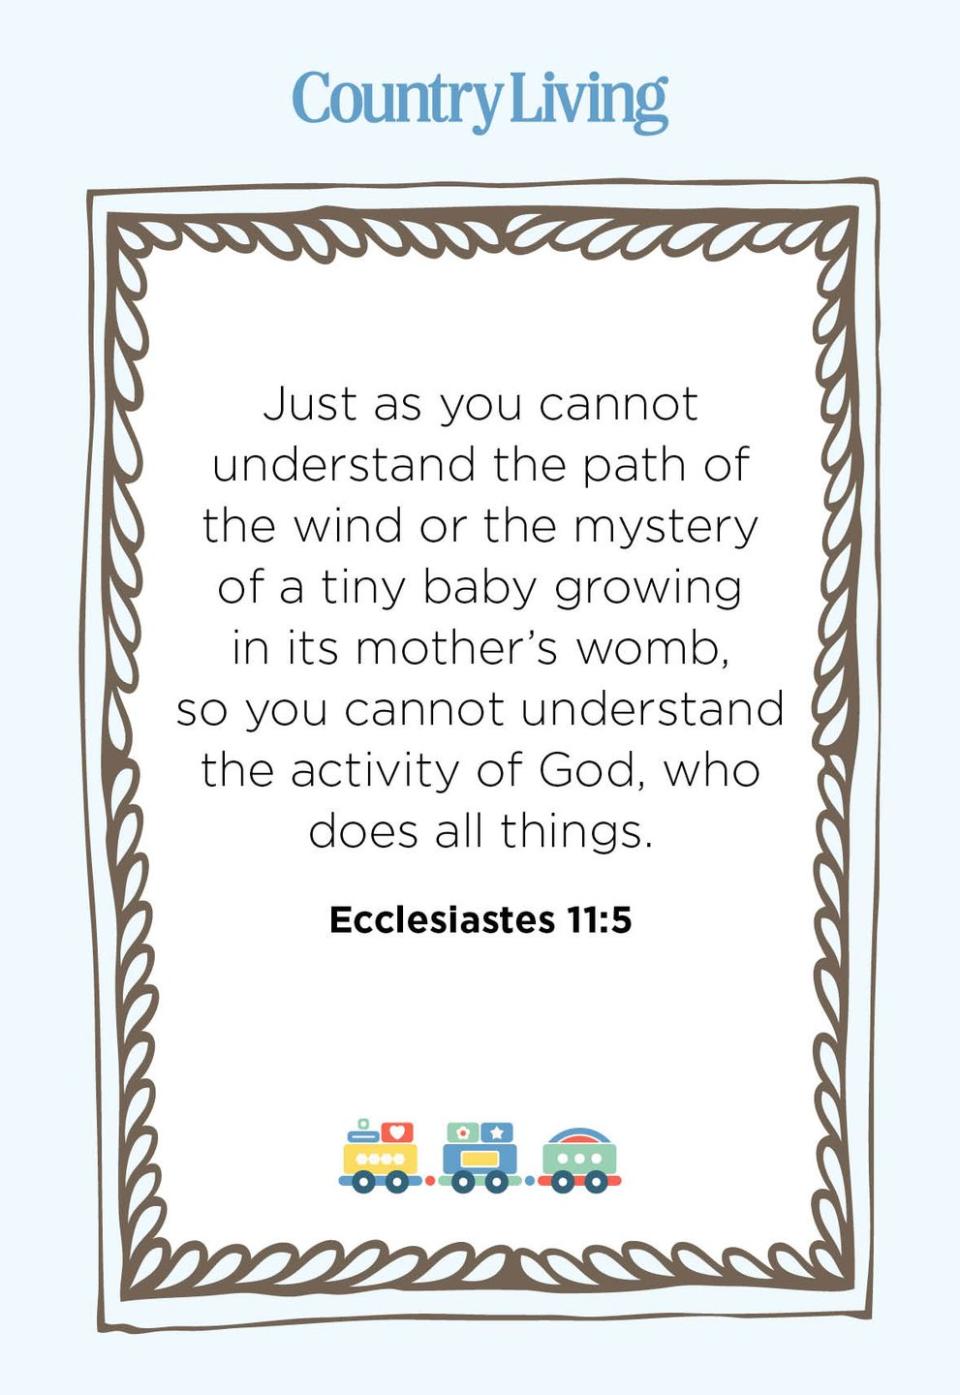 13) Ecclesiastes 11:5